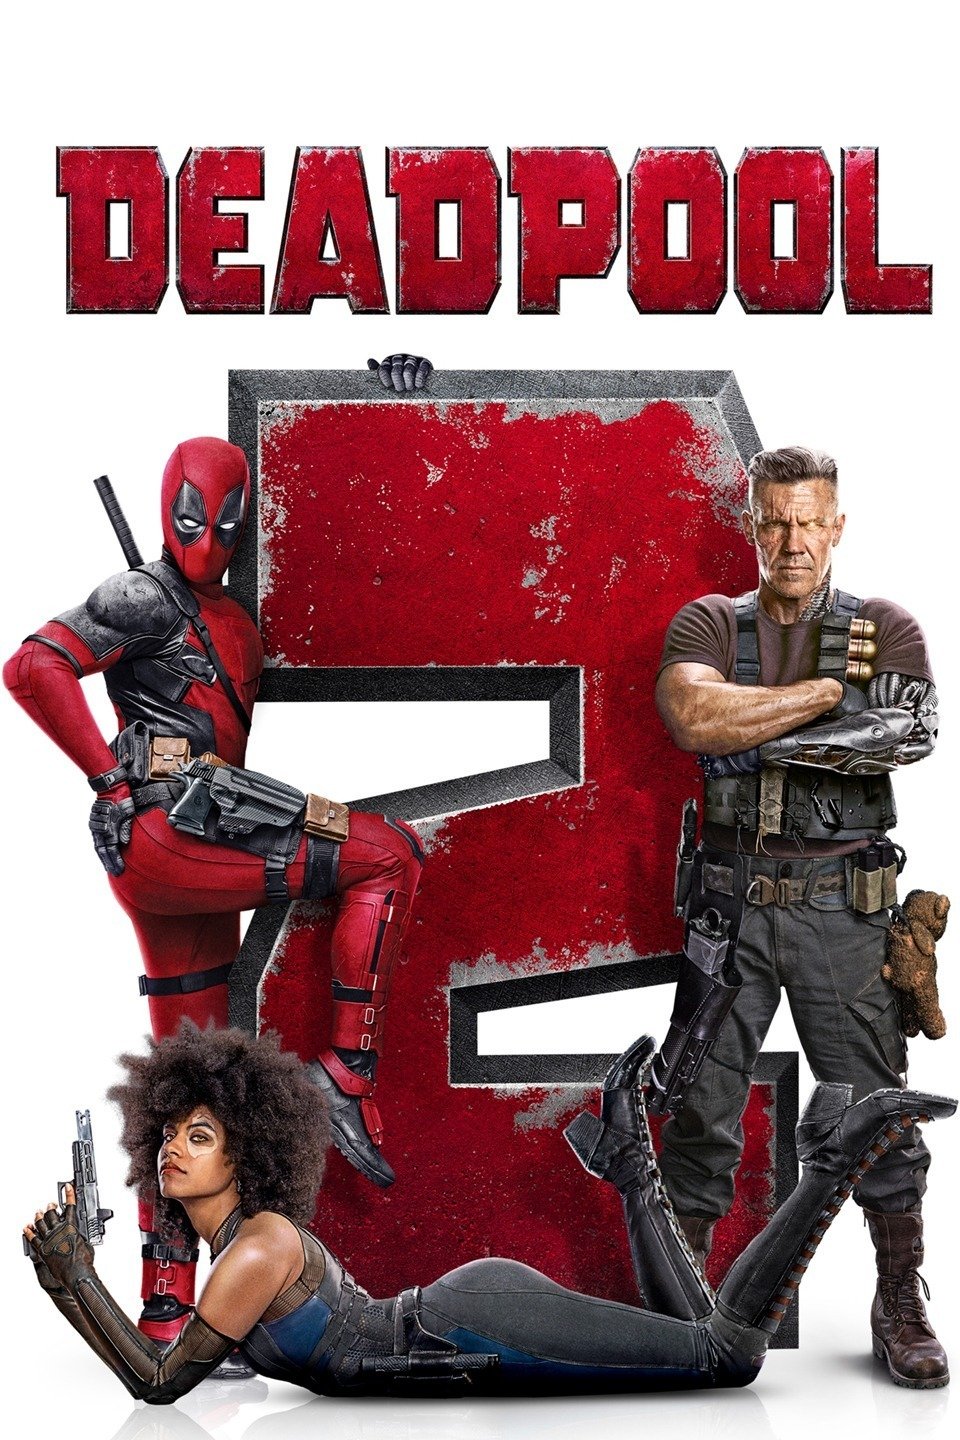 [MINI Super-HQ] Deadpool 2 (2018) เดดพูล 2 [1080p] [Theatrical Cut] [พากย์ไทย มาสเตอร์ + เสียงอังกฤษ DTS] [บรรยายไทย + อังกฤษ] [เสียงไทย + ซับไทย]